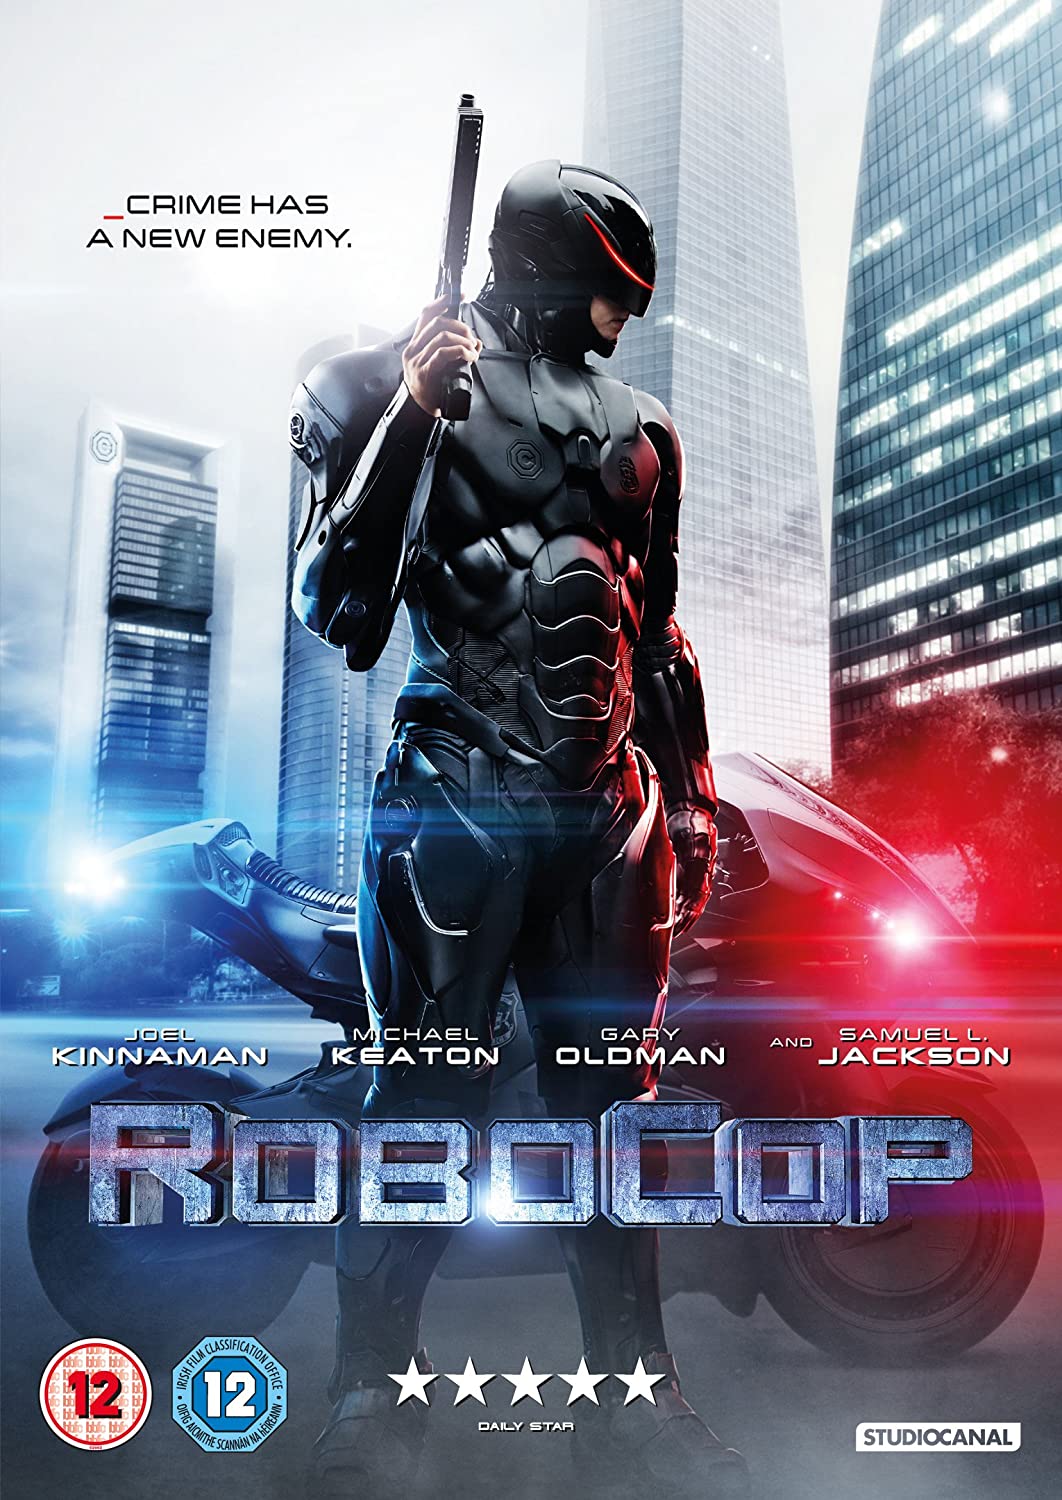 Robocop [2014] - Action/Sci-fi [DVD]